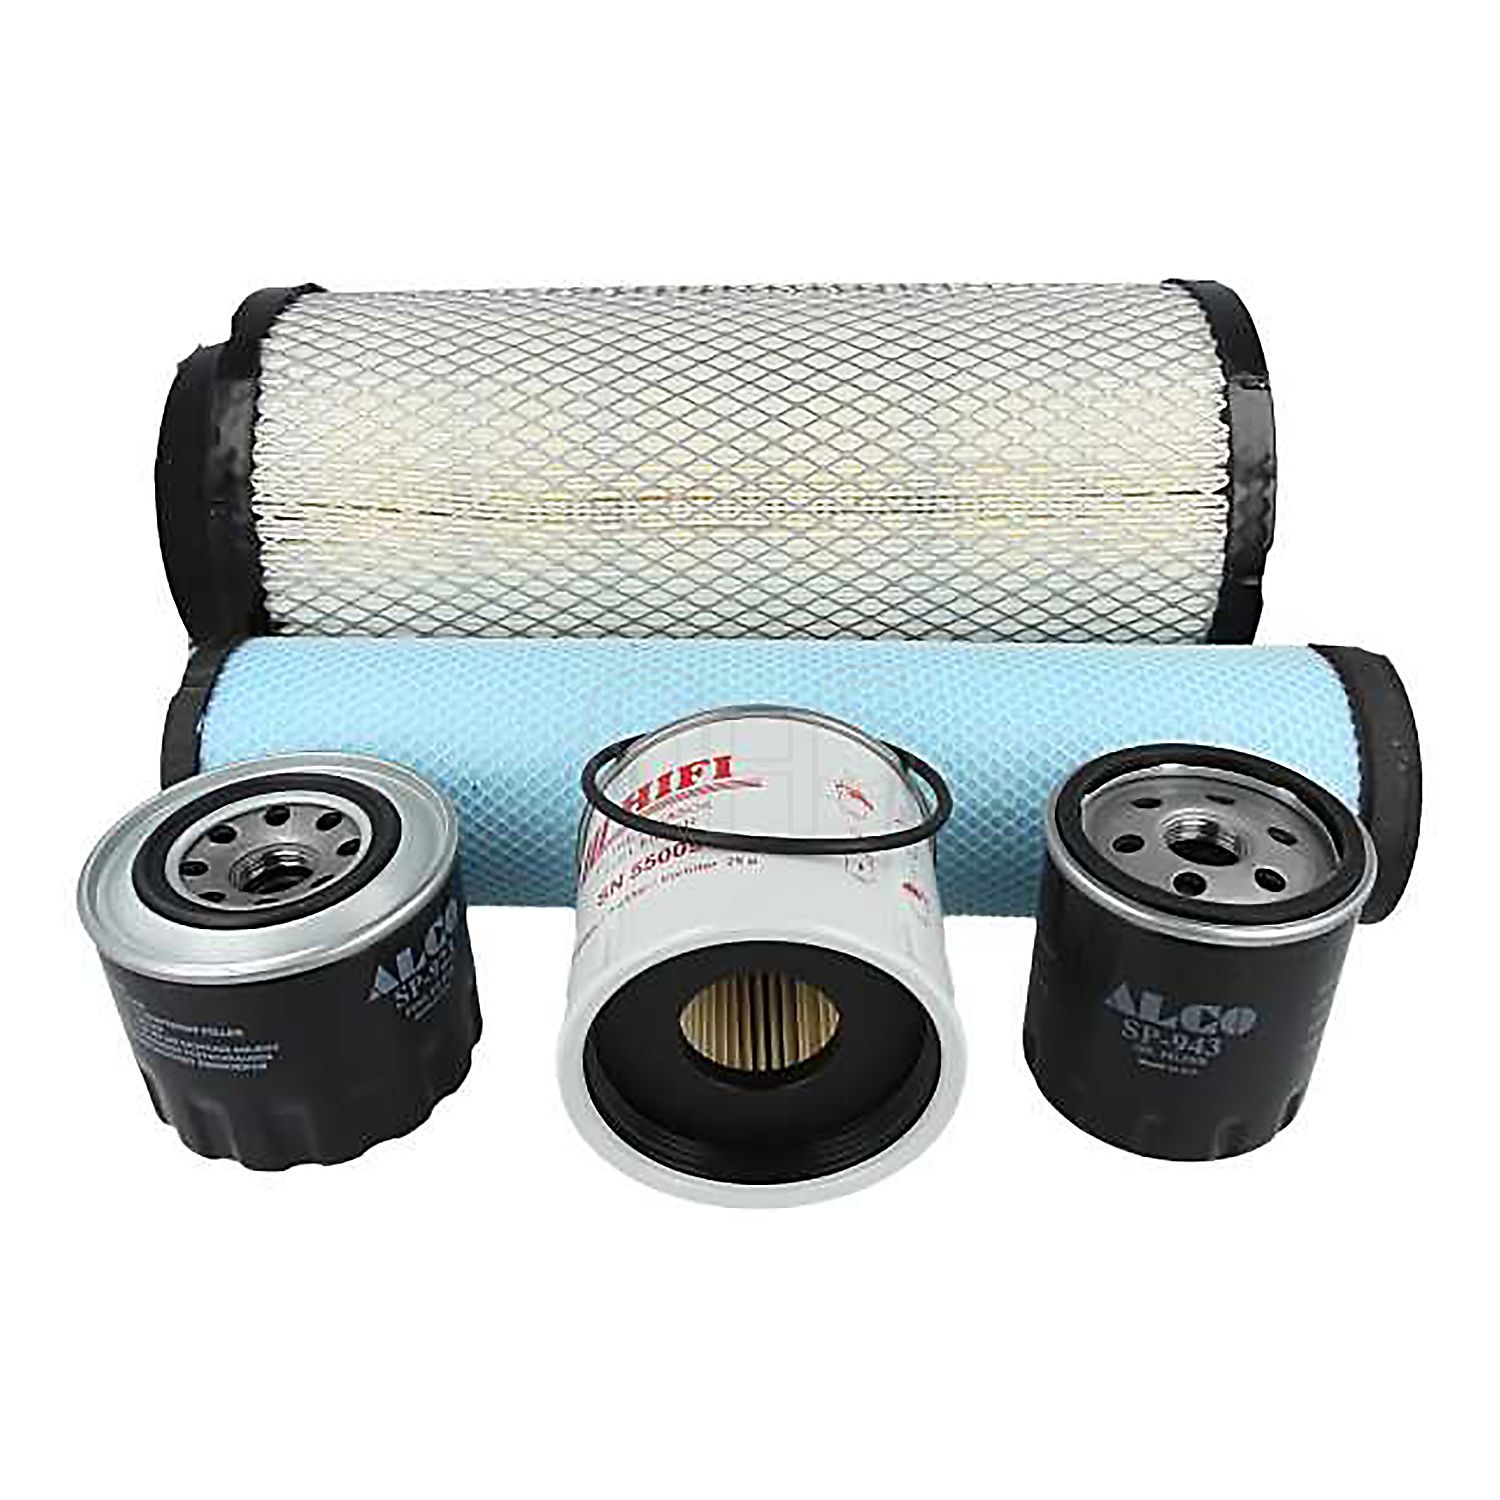 Ingersoll-Rand Filter Service Kit Fits Ingersoll rand 7/41 - Air Fuel Oil Isuzu Engine 